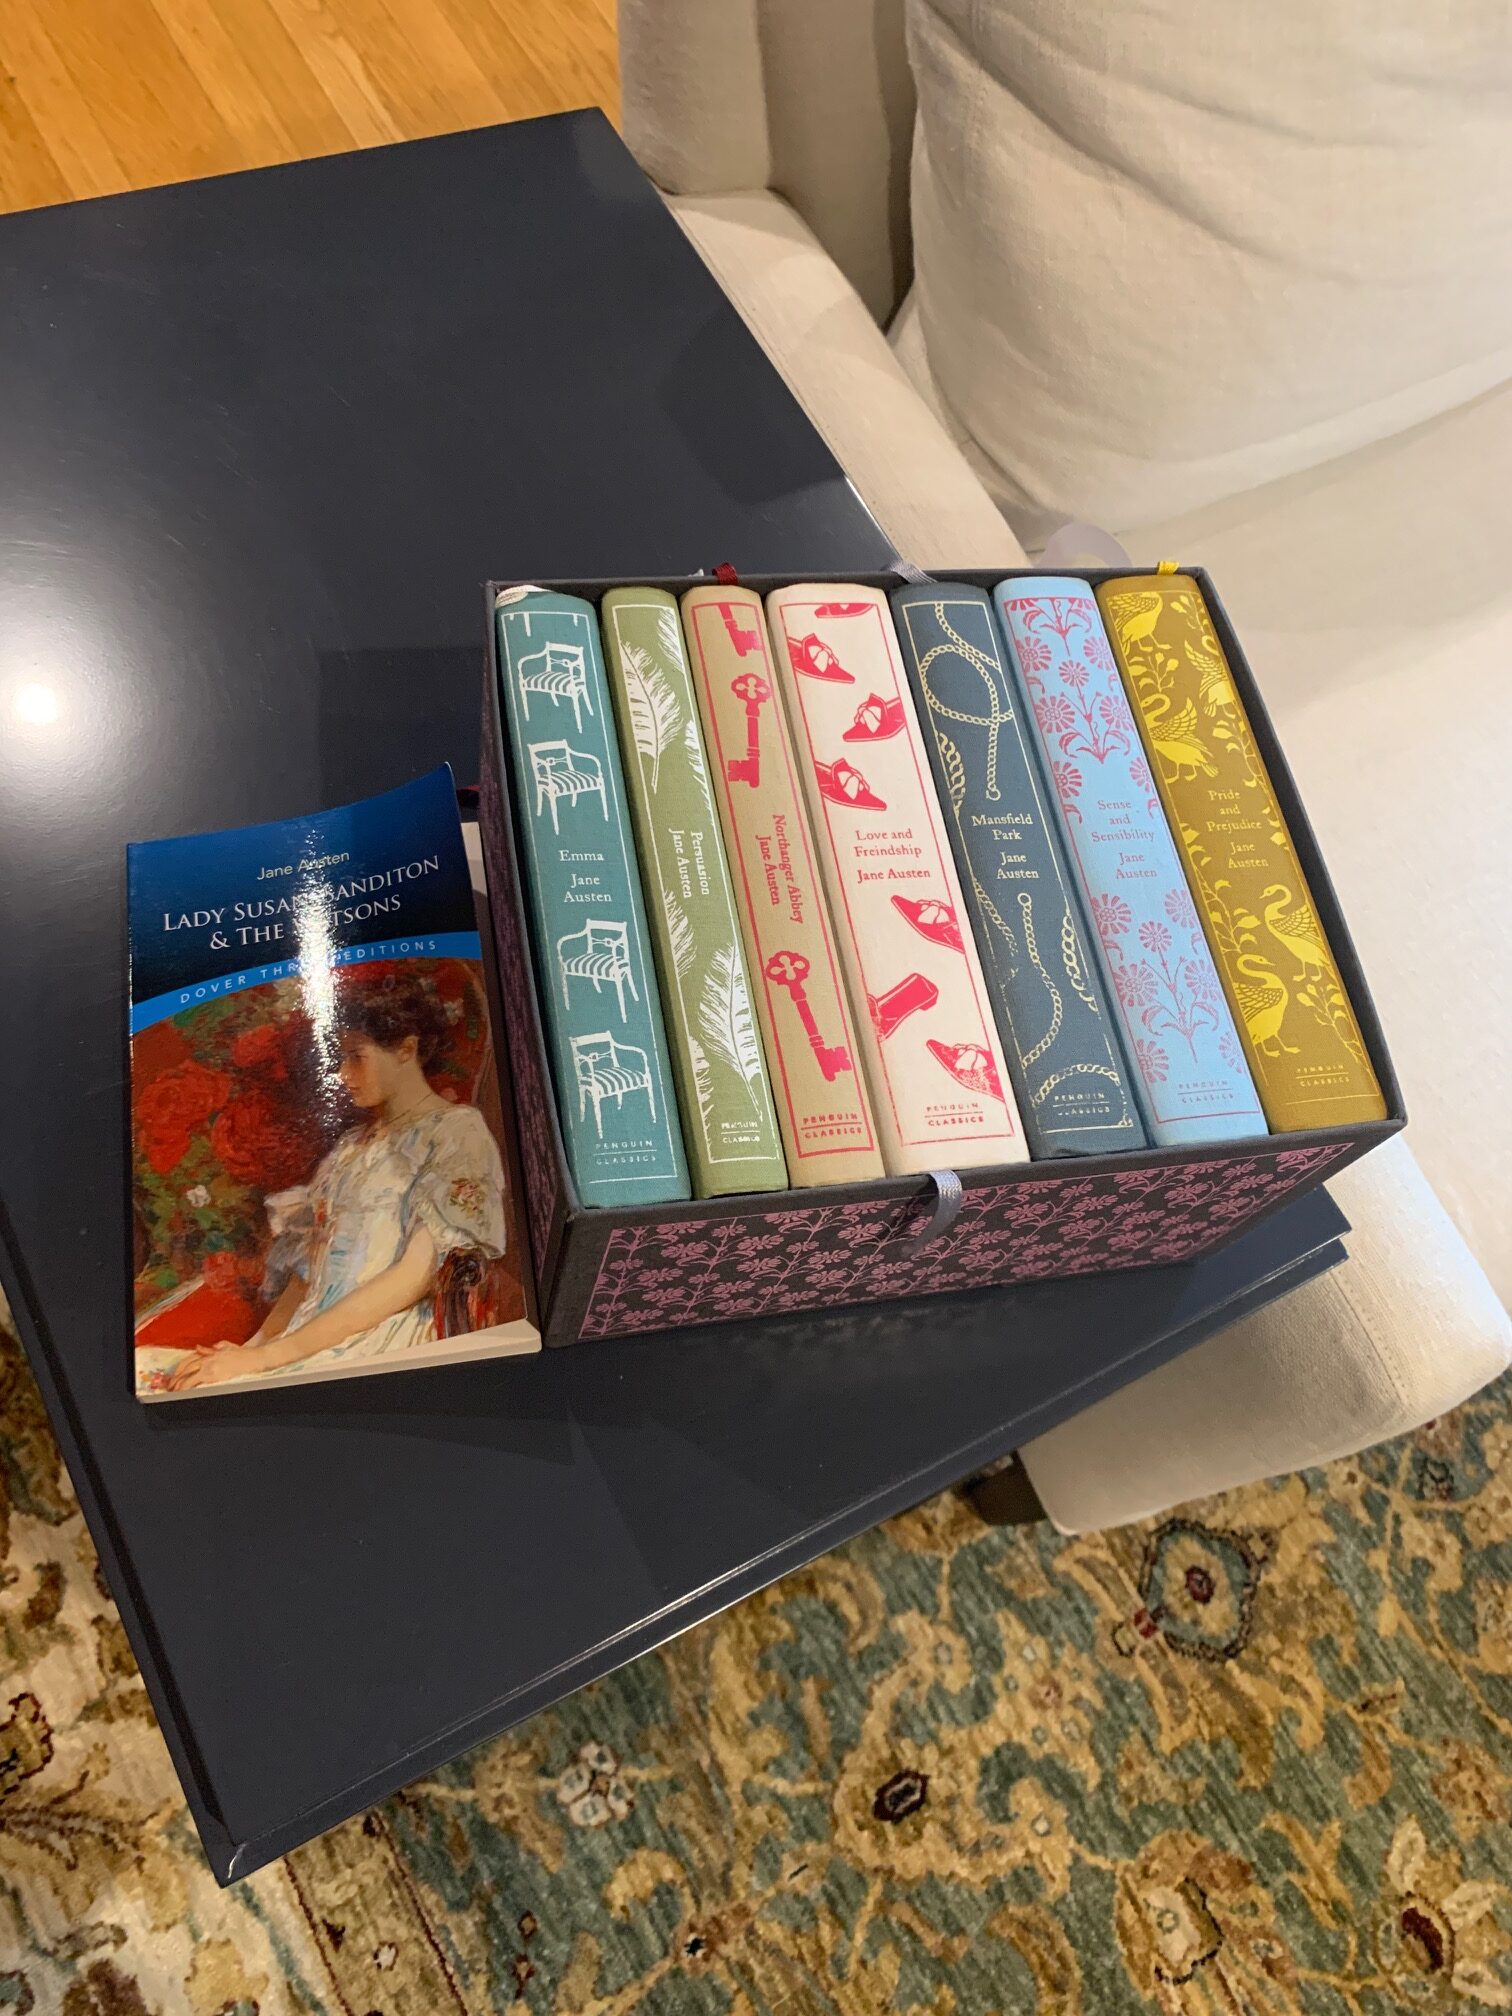 Actually, Emma is the Best Jane Austen Novel ‹ Literary Hub